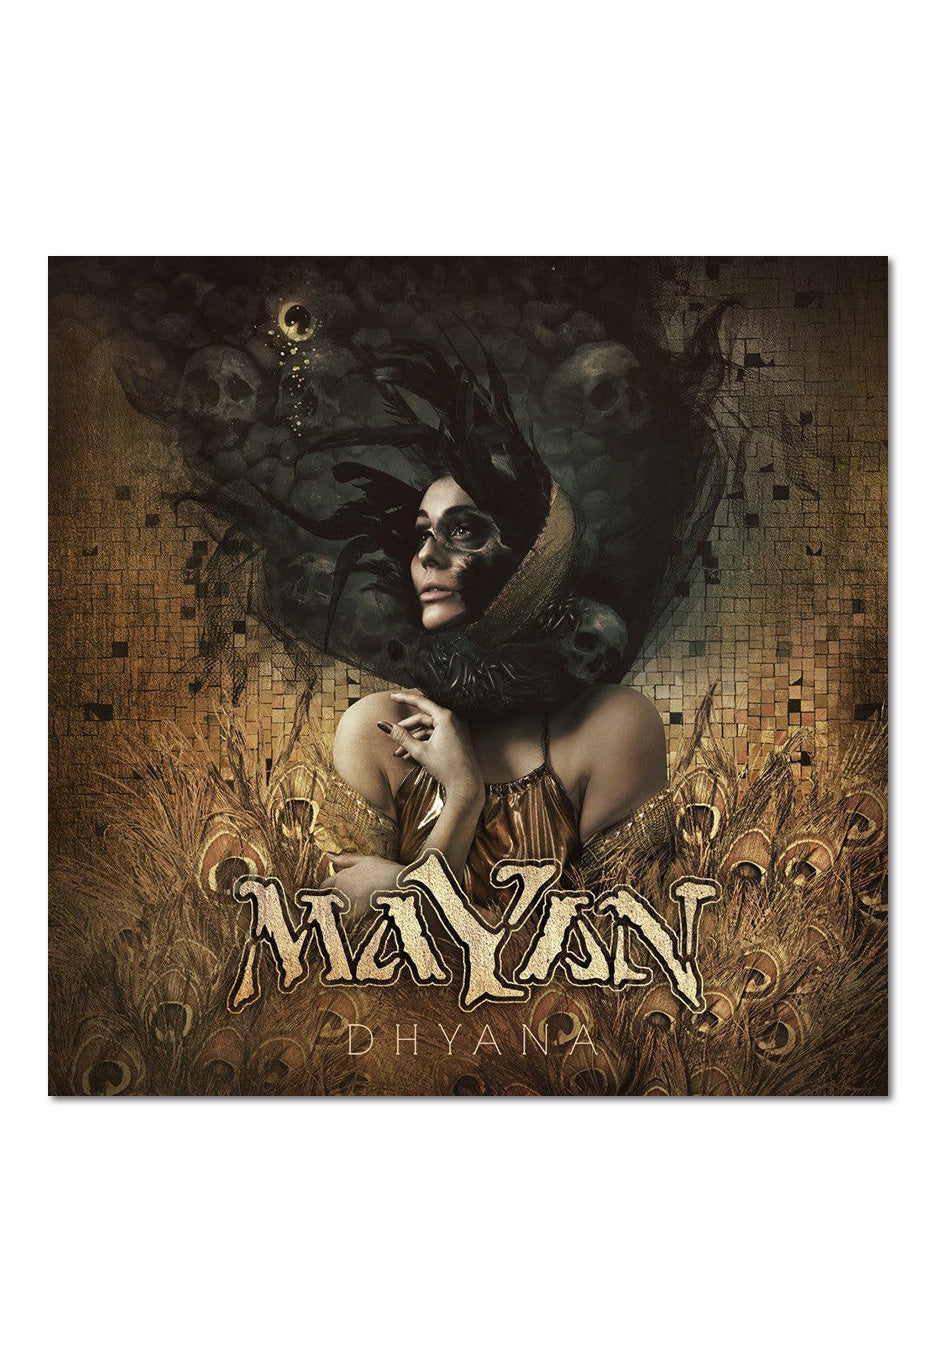 Mayan - Dhyana - 2 CD